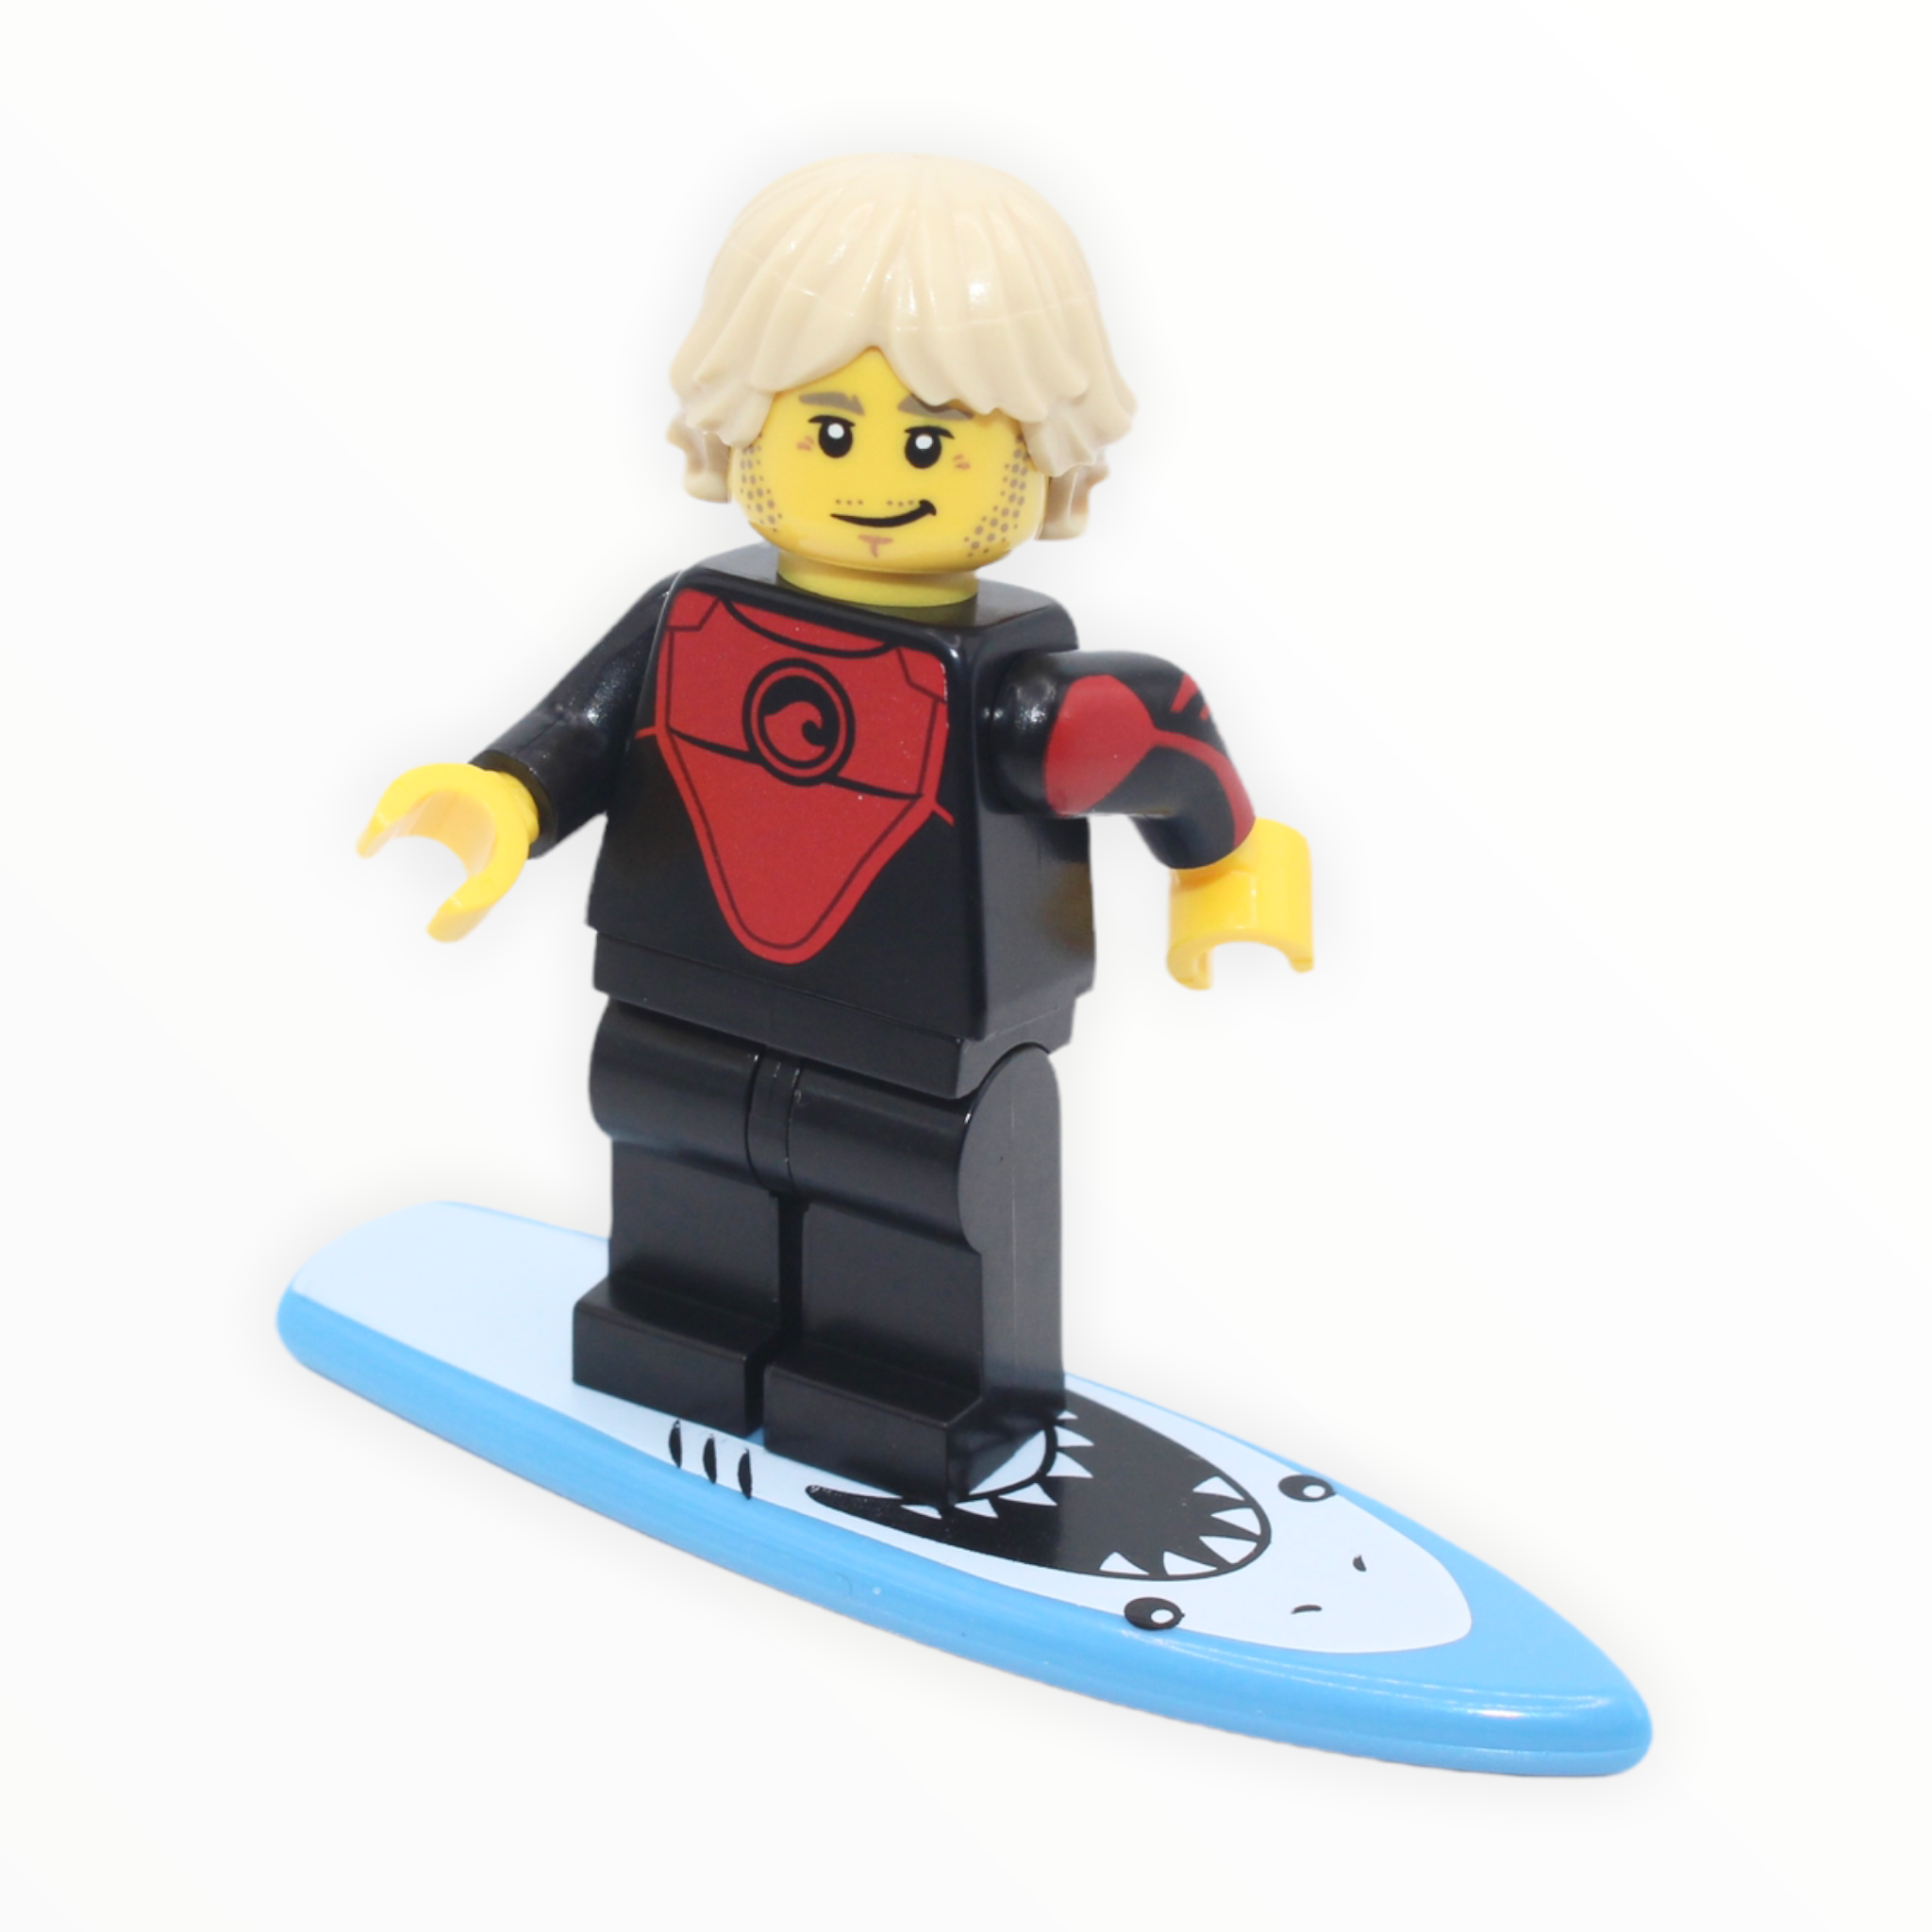 Parana River Lubricate mordant LEGO Series 17: Pro Surfer